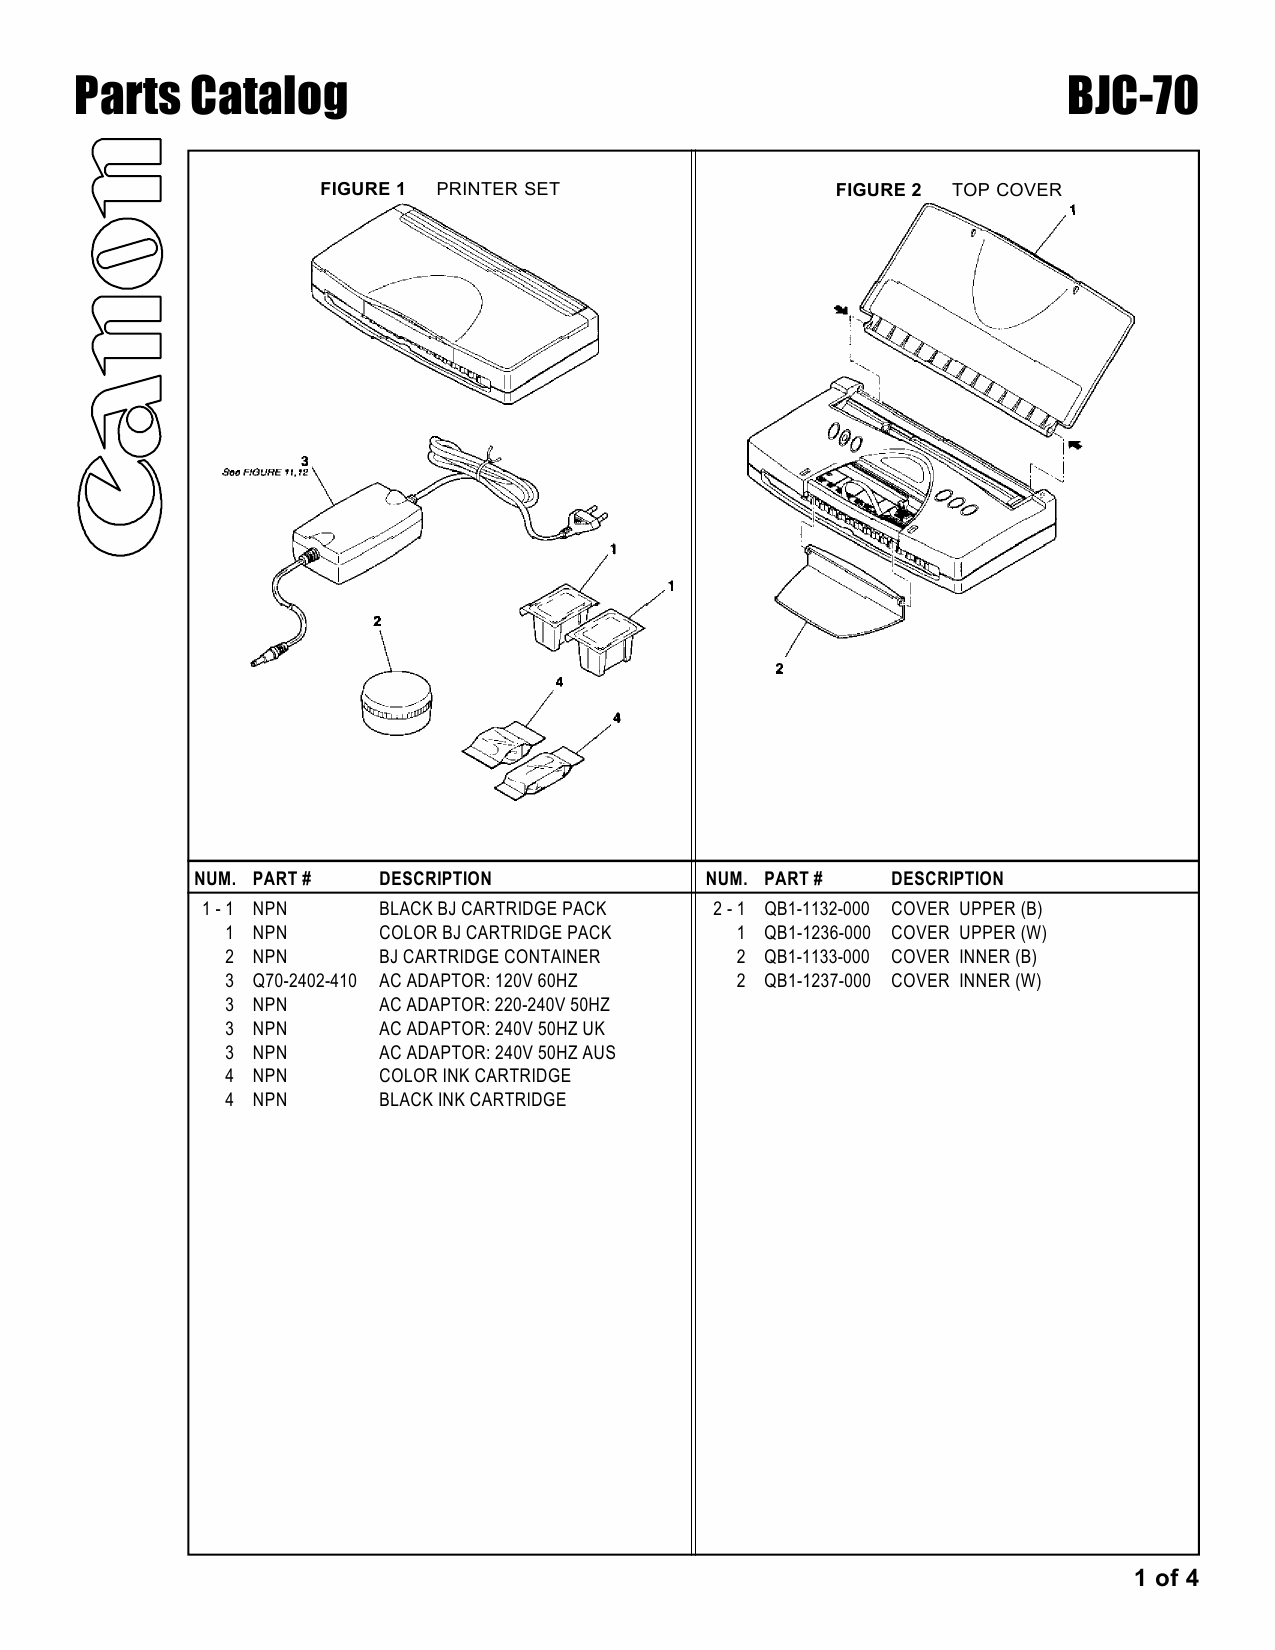 Canon BubbleJet BJC-70 Parts Catalog Manual-2